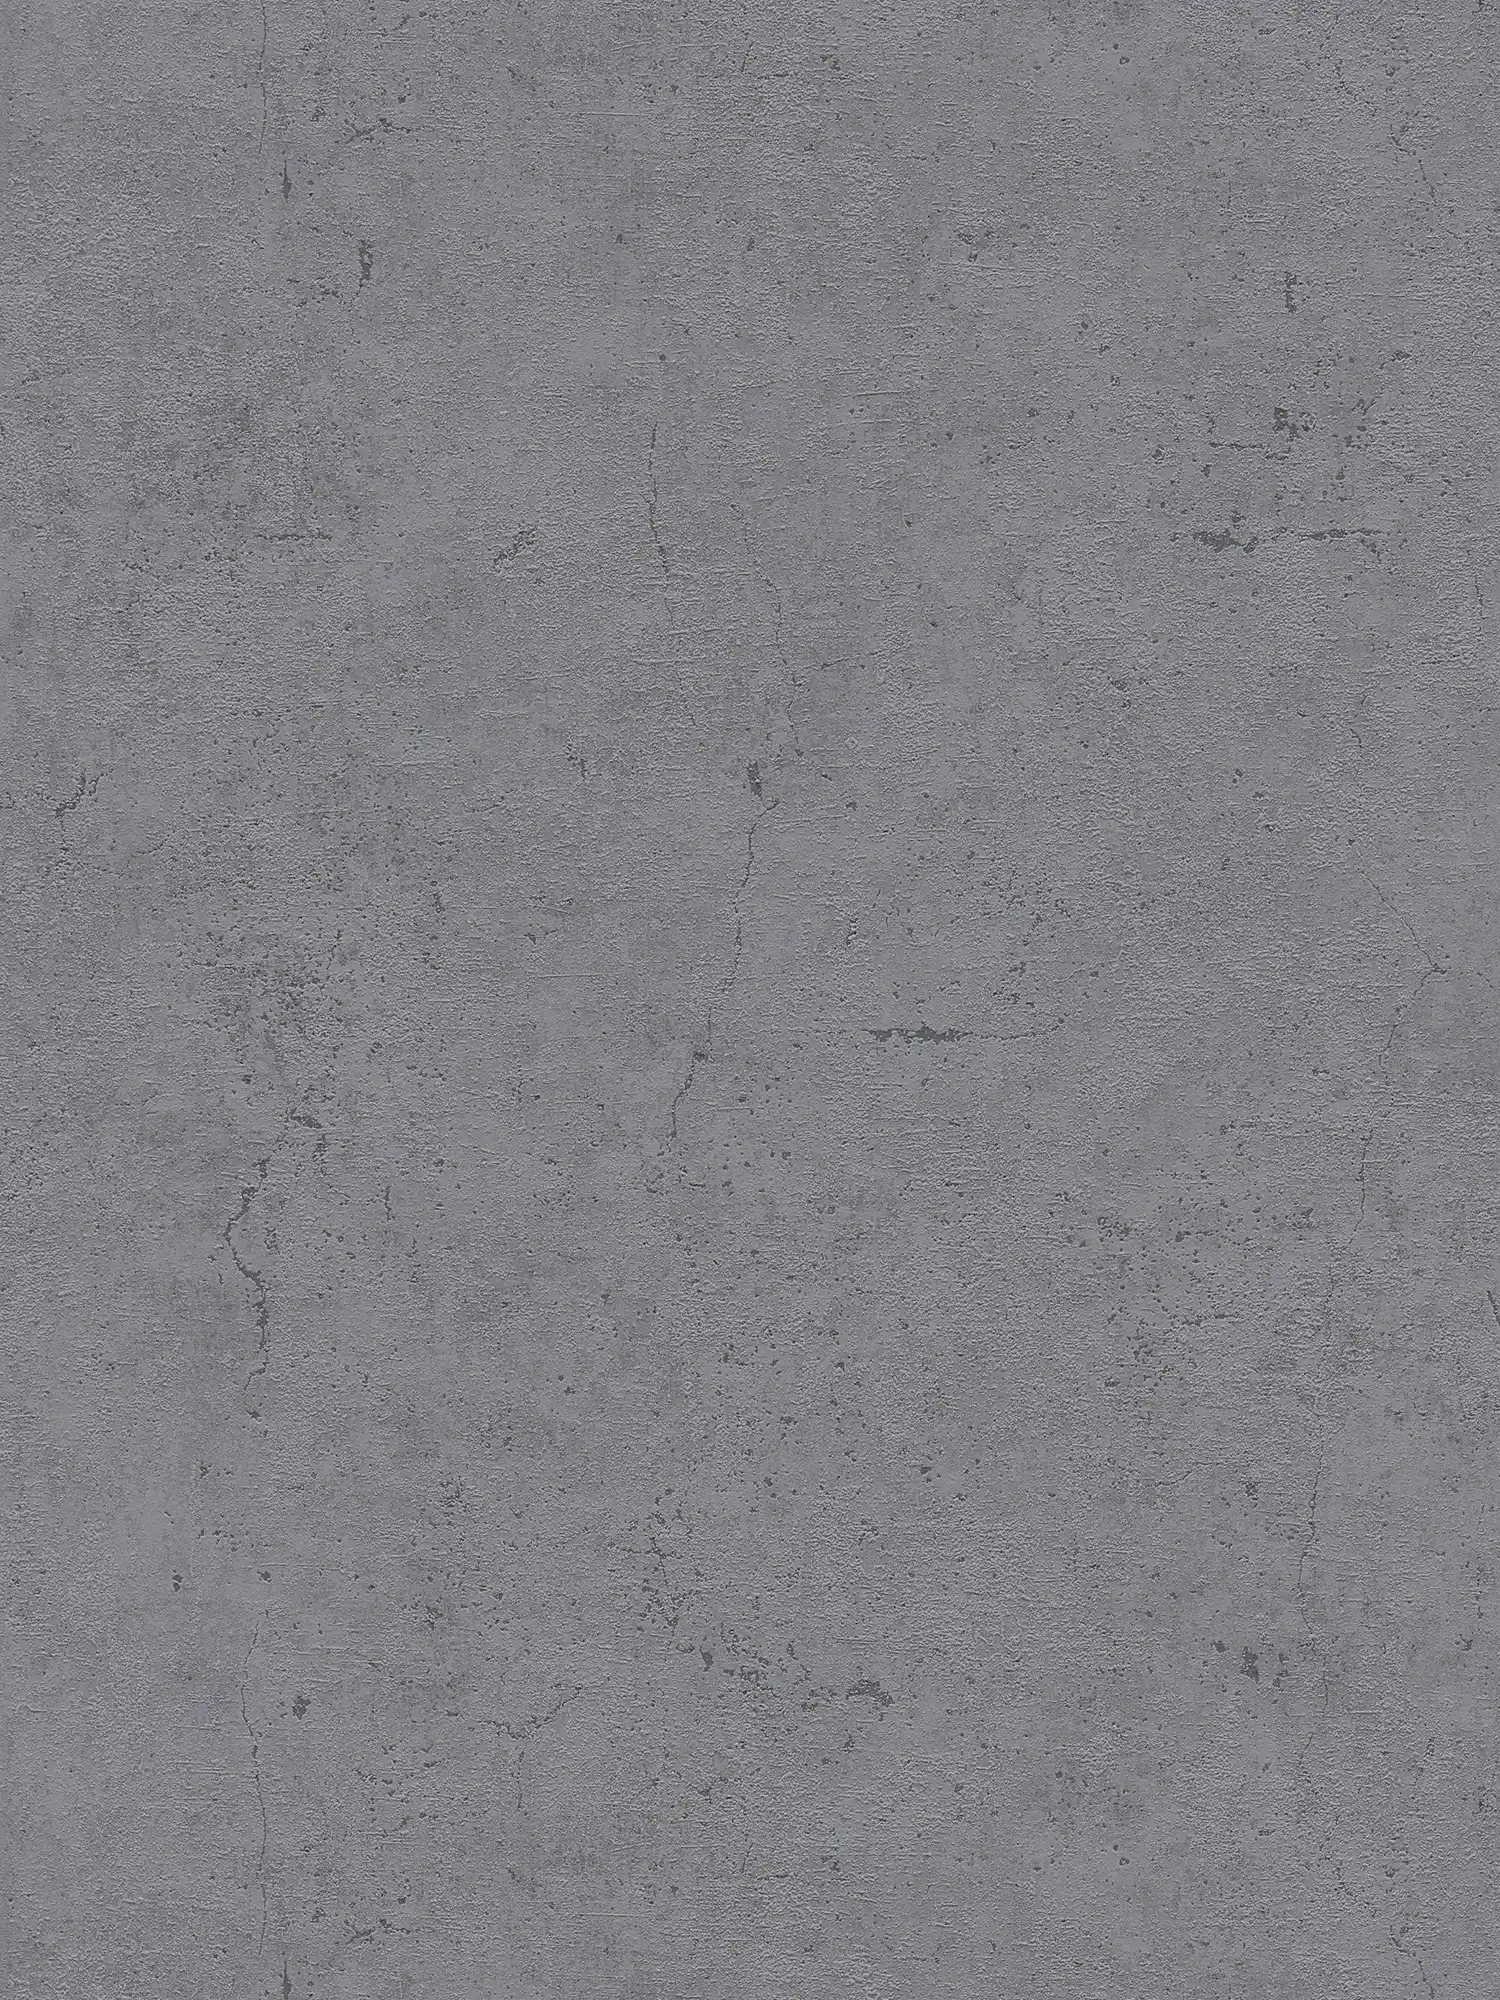 Wallpaper with concrete look, optical cracks & pores - grey
